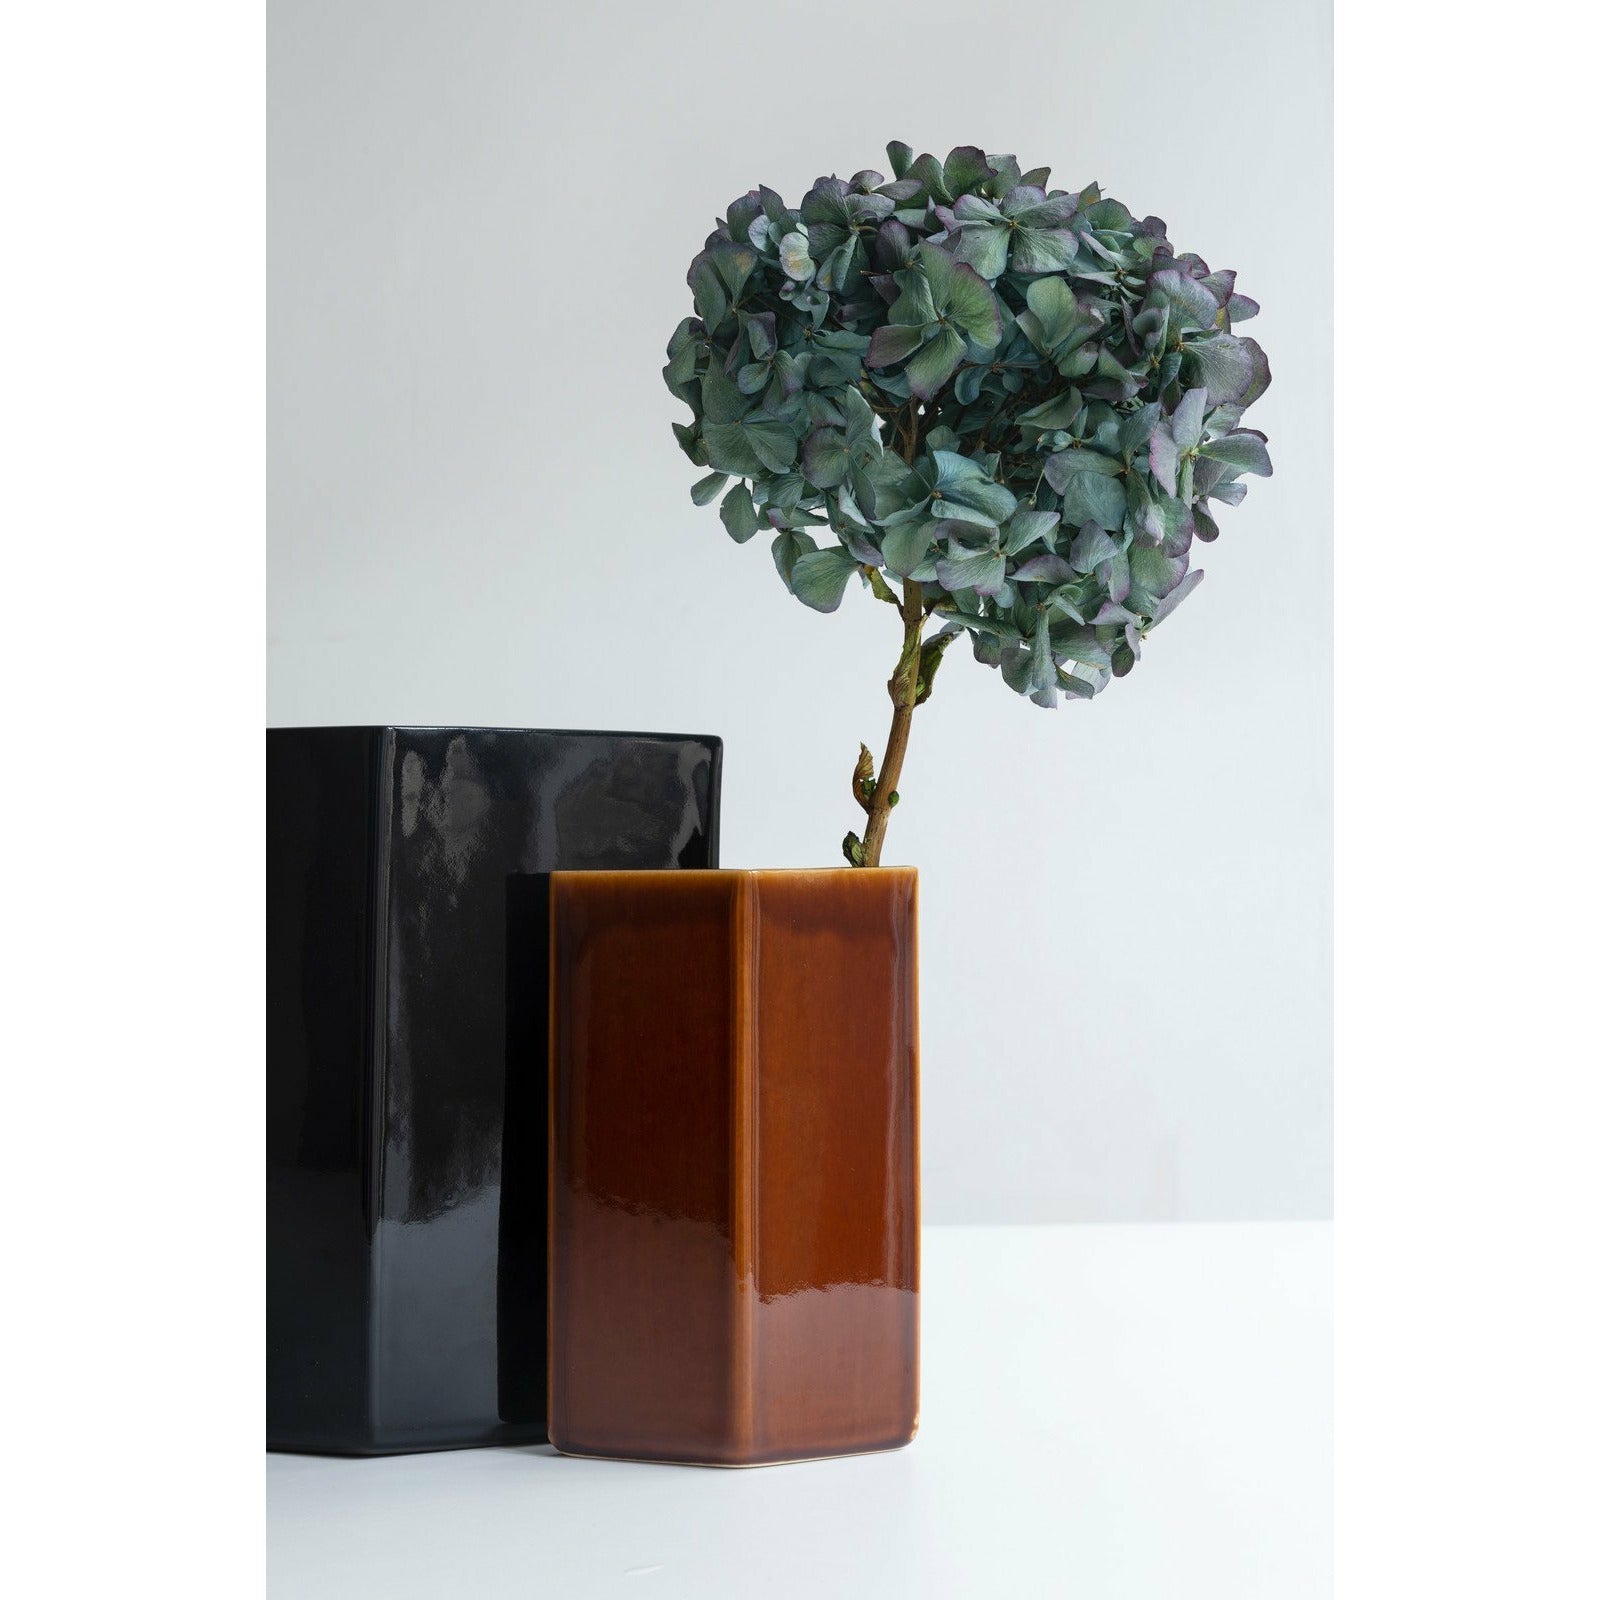 Iittala ruutu wazon ceramiczny Brown, 18 cm